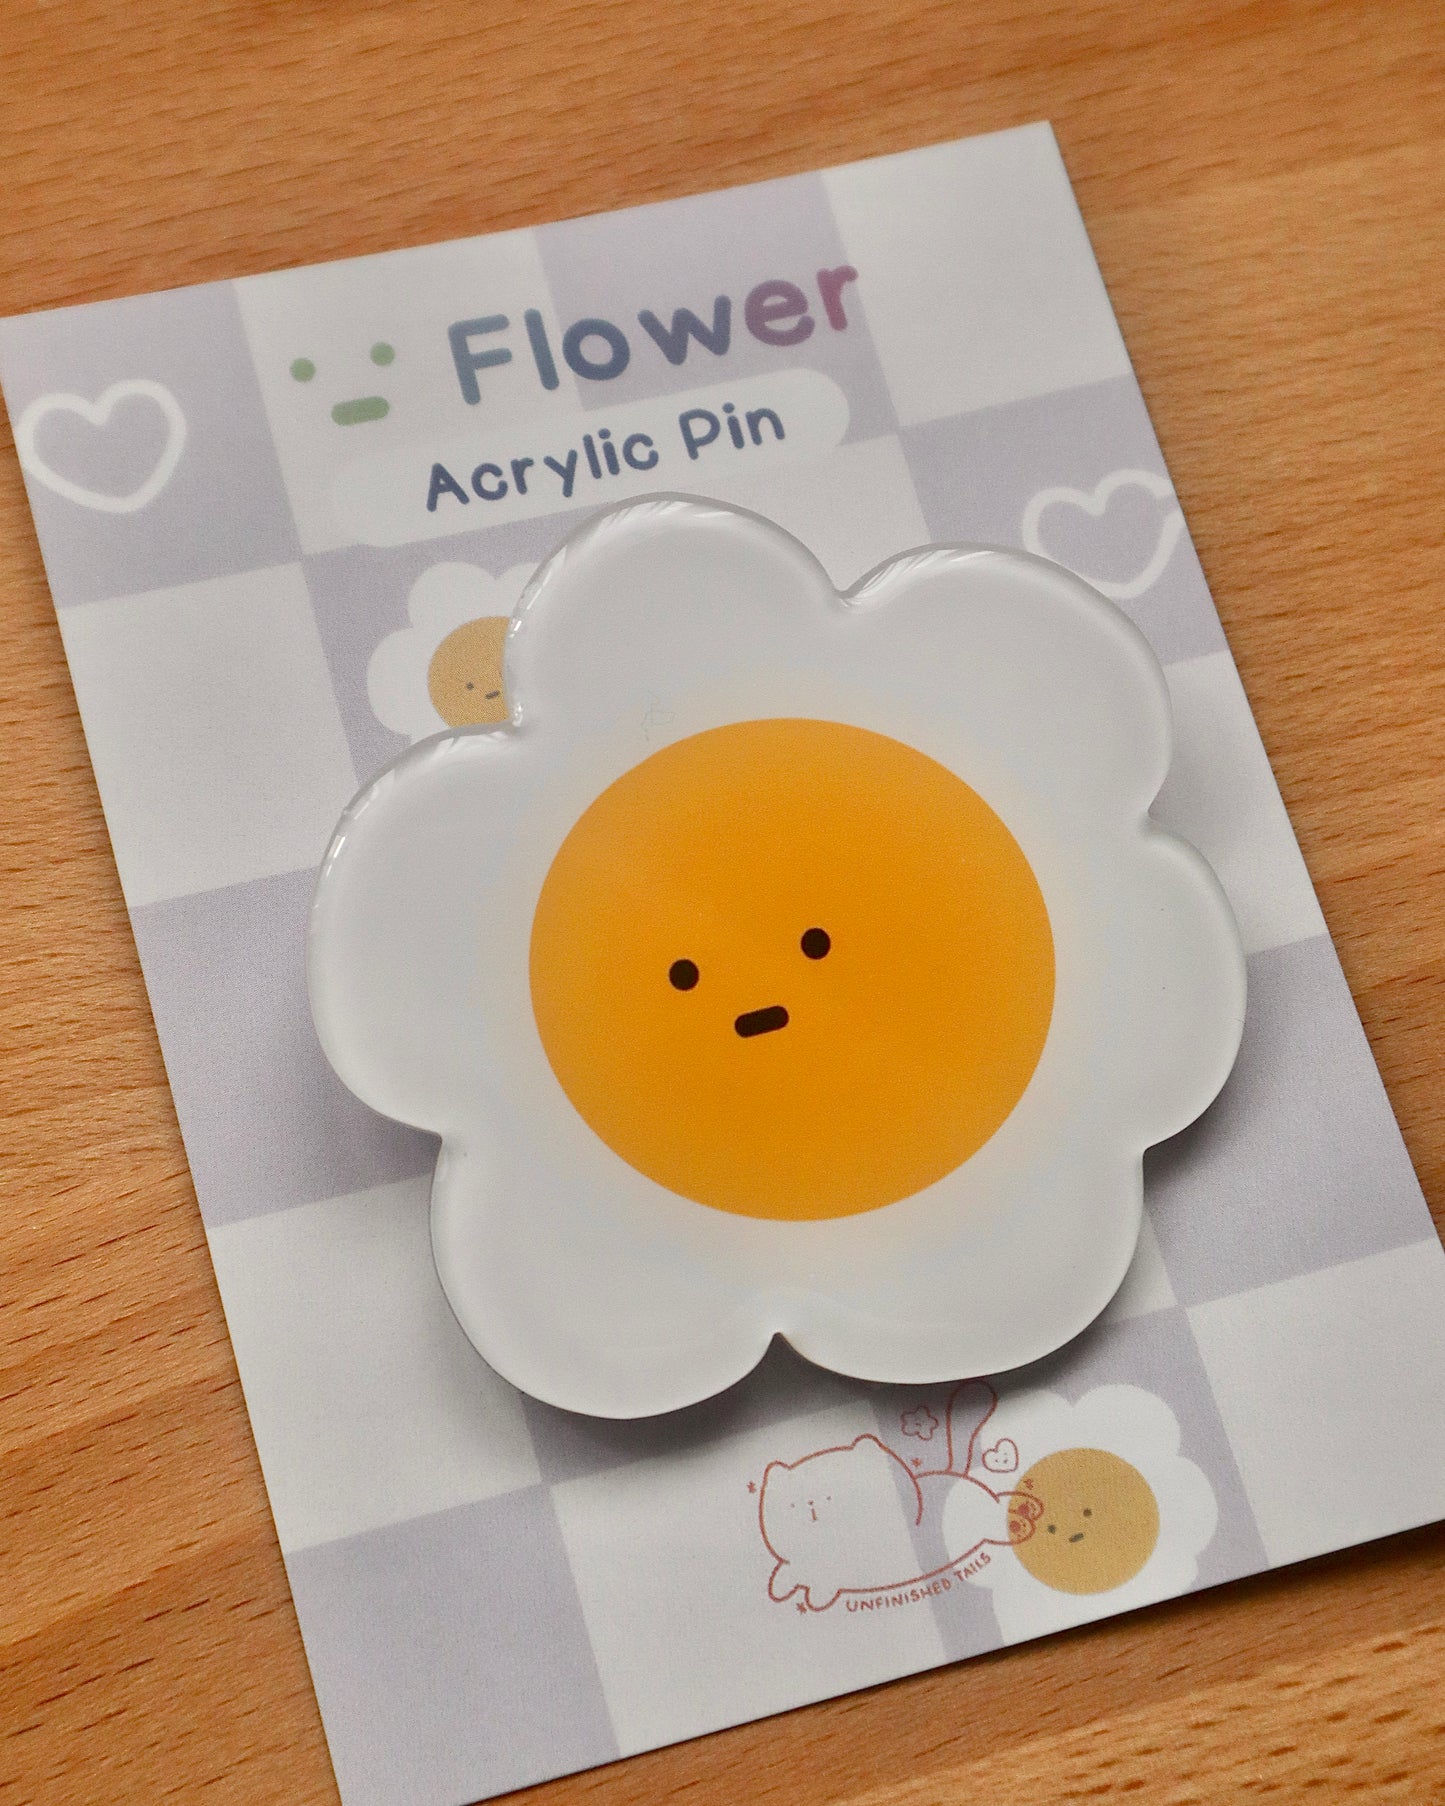 ・_・Flower Acrylic Pin